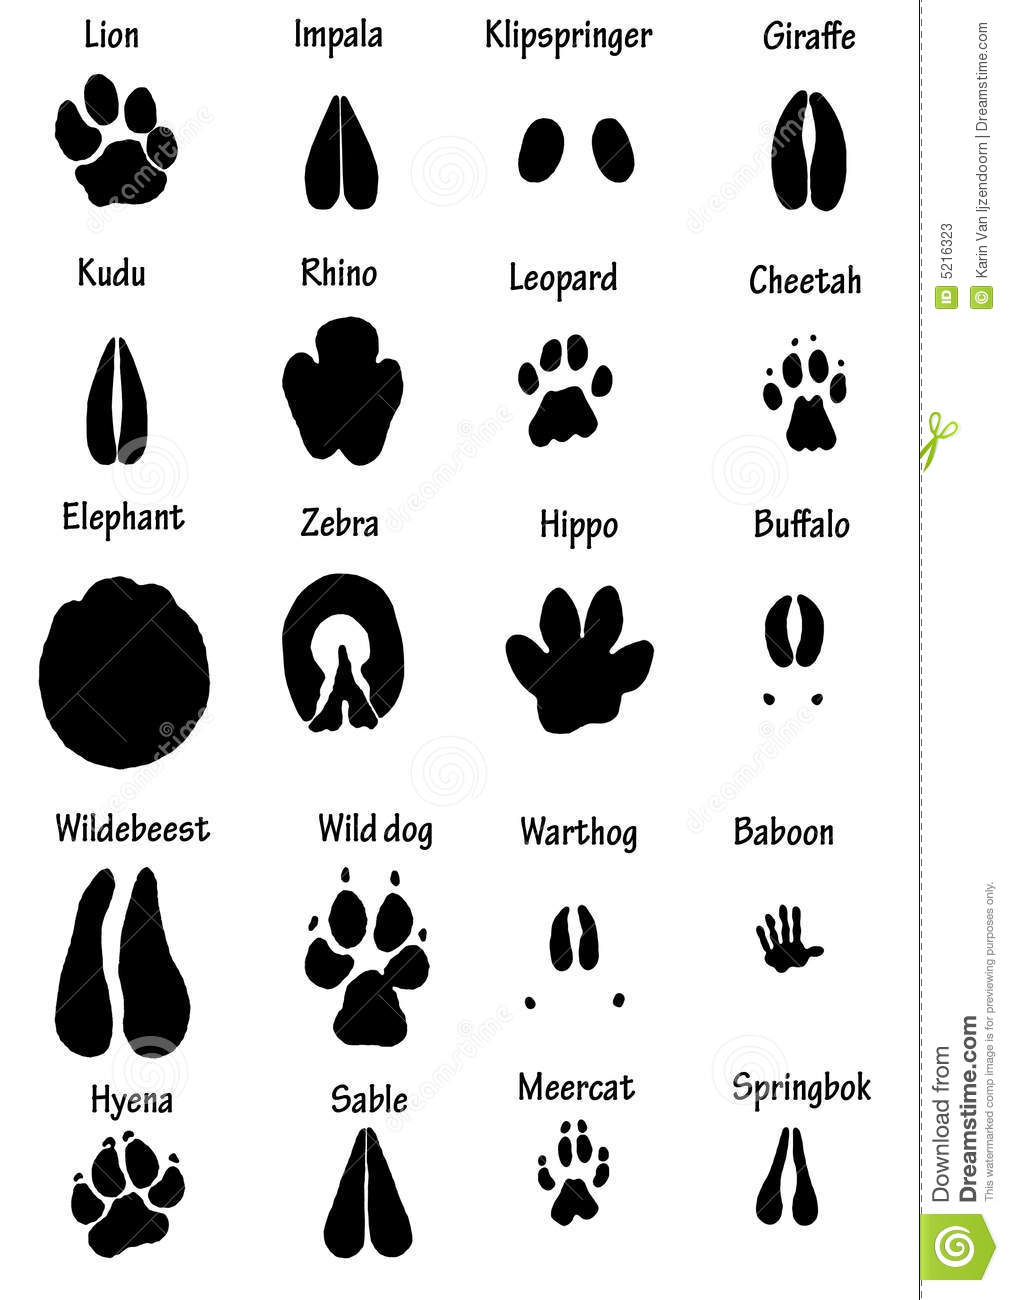 5 Best Images of Printable Elephant Foot Prints Elephant Foot Bottom